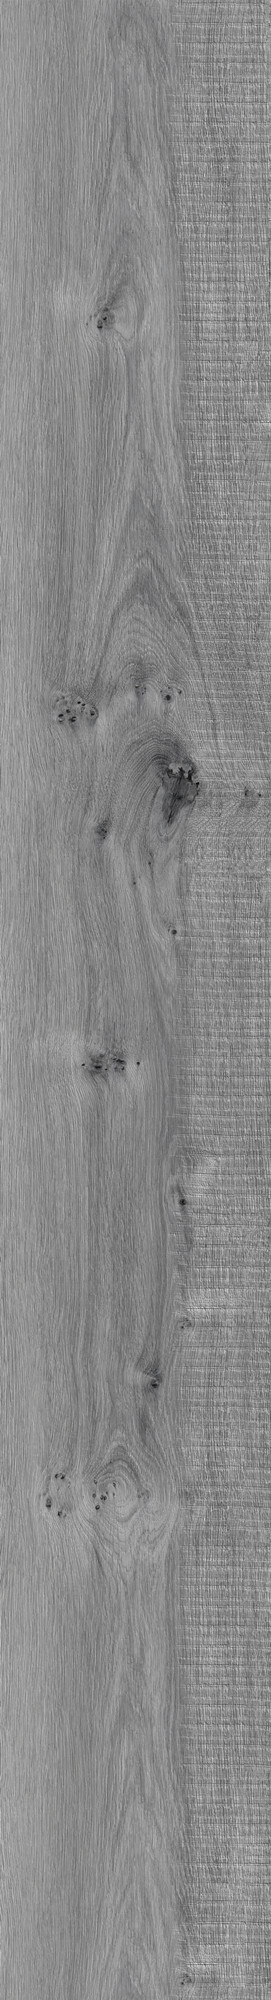 Hanflor Oak SPC Plank Flooring Gray Vinyl Flooring 9''x48'' 6.5mm Sound Absorbing IXPE Undepad HIF 21527